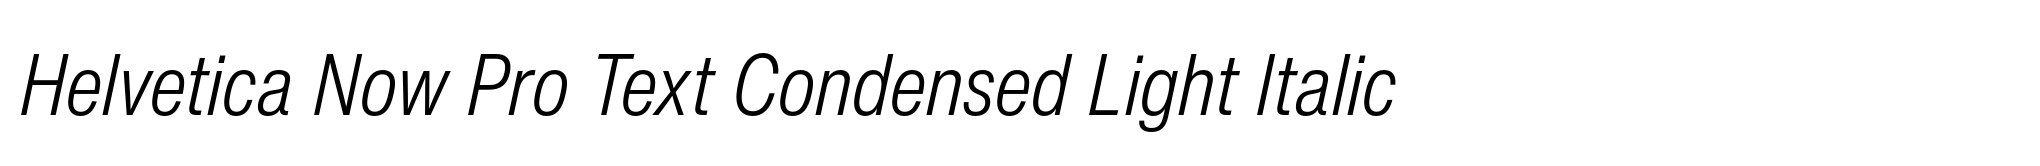 Helvetica Now Pro Text Condensed Light Italic image